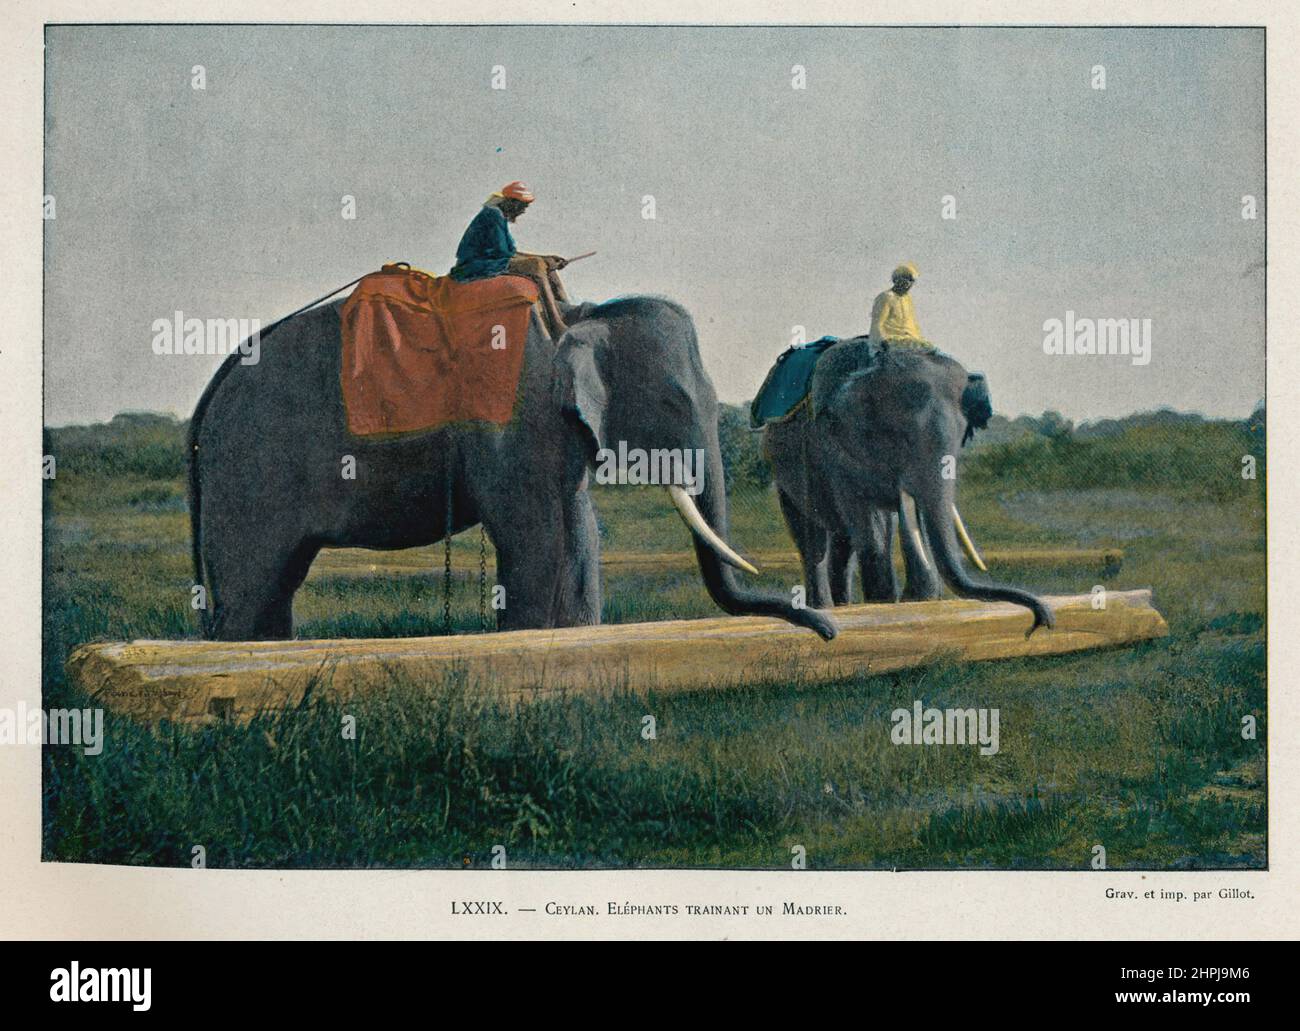 Autour Du Monde Iles Adaman Ceylon 1895 - 1900  (8)  - 19 th century french colored photography print Stock Photo